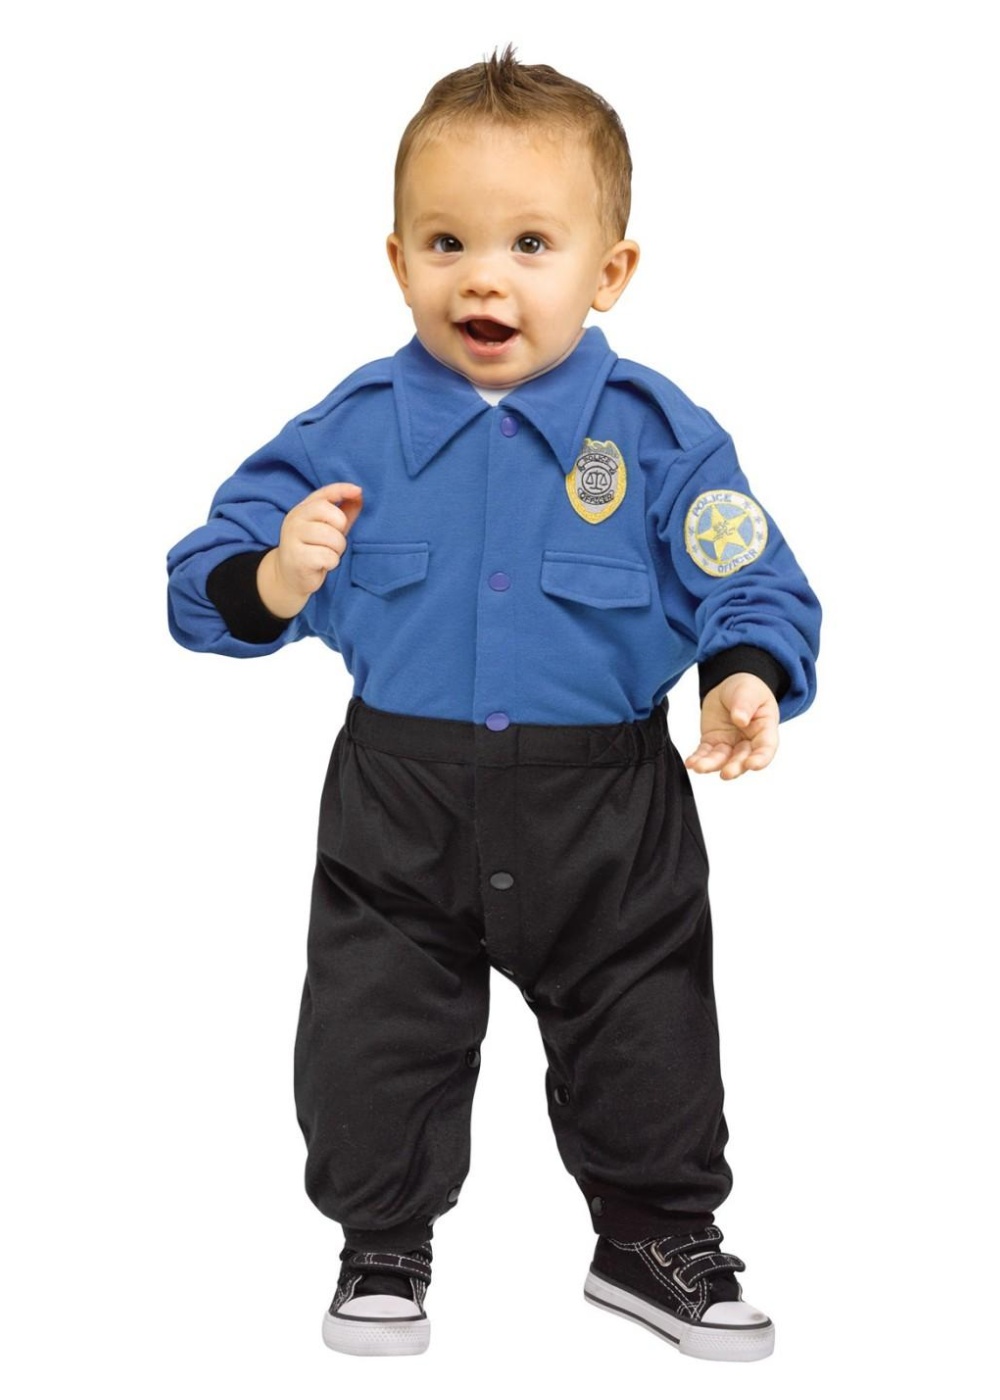  Policeman Baby Costume